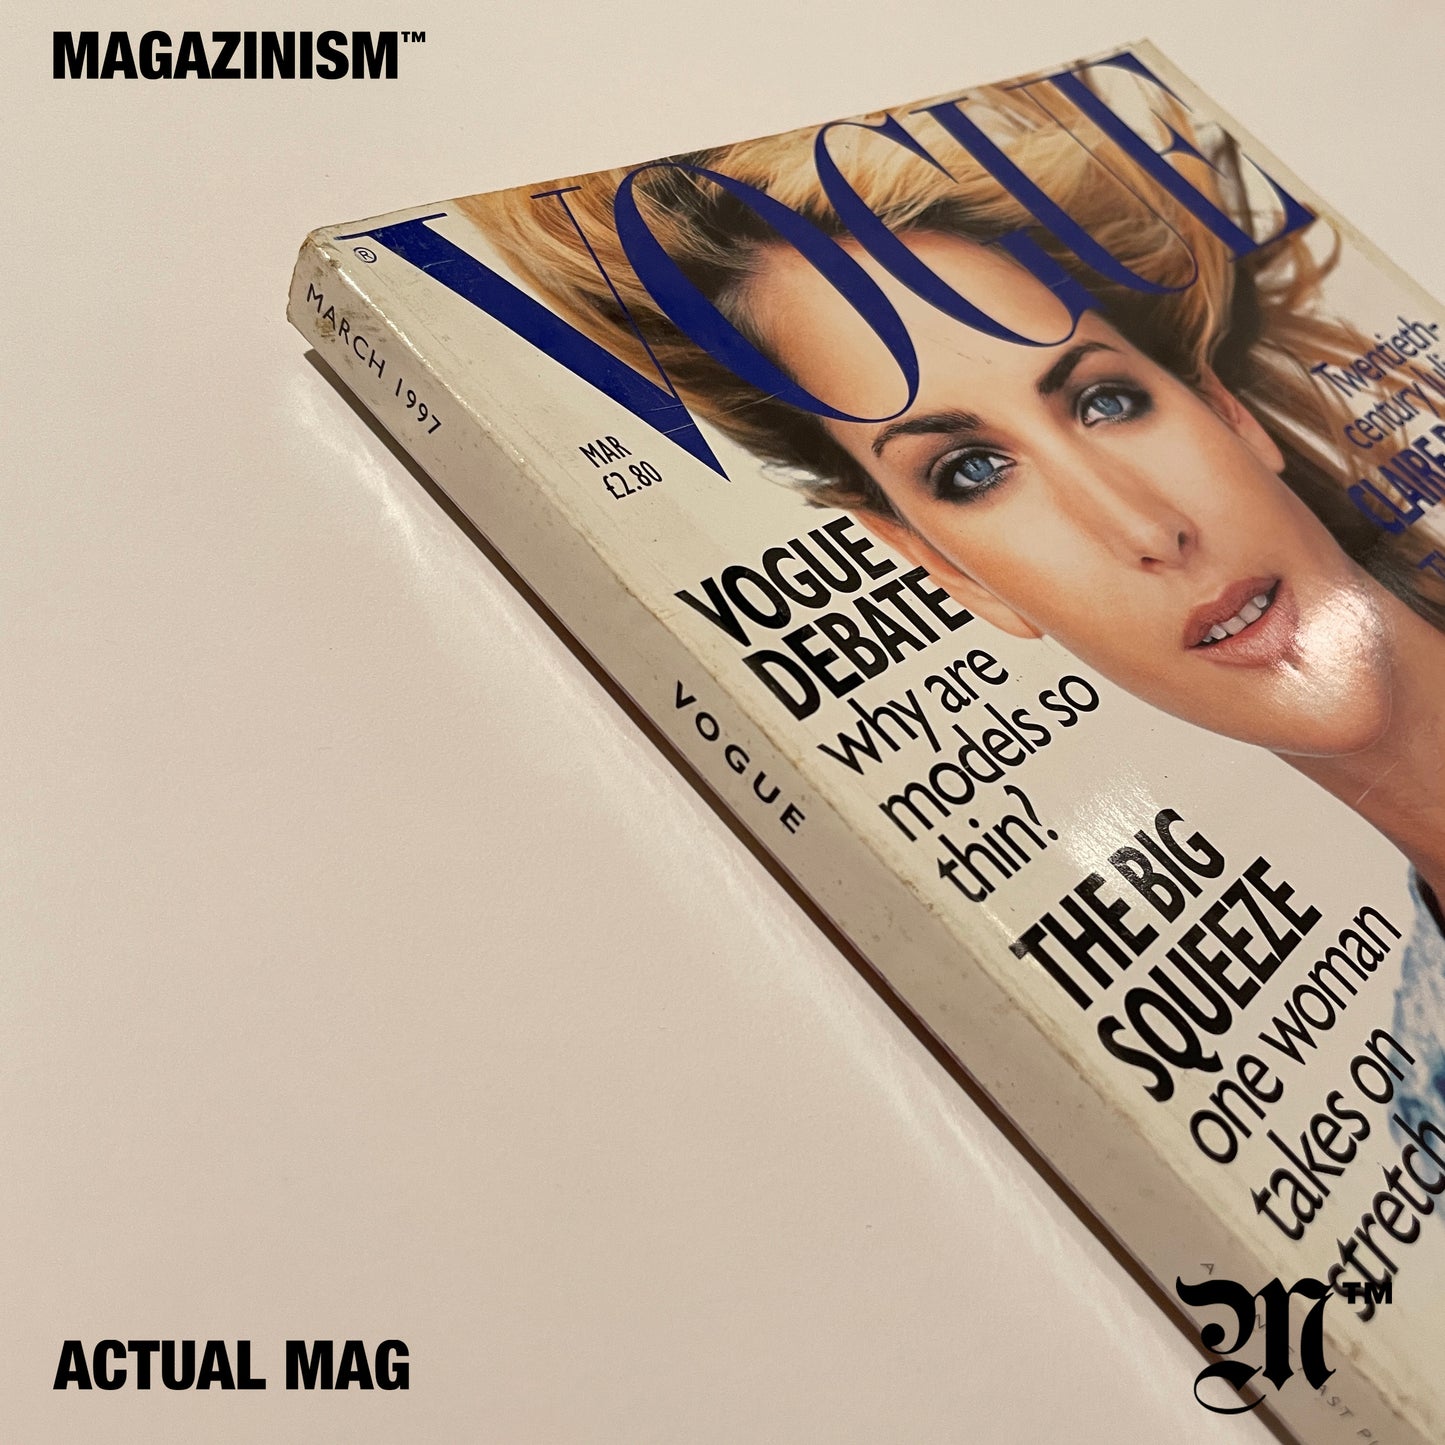 Vogue 1997 March